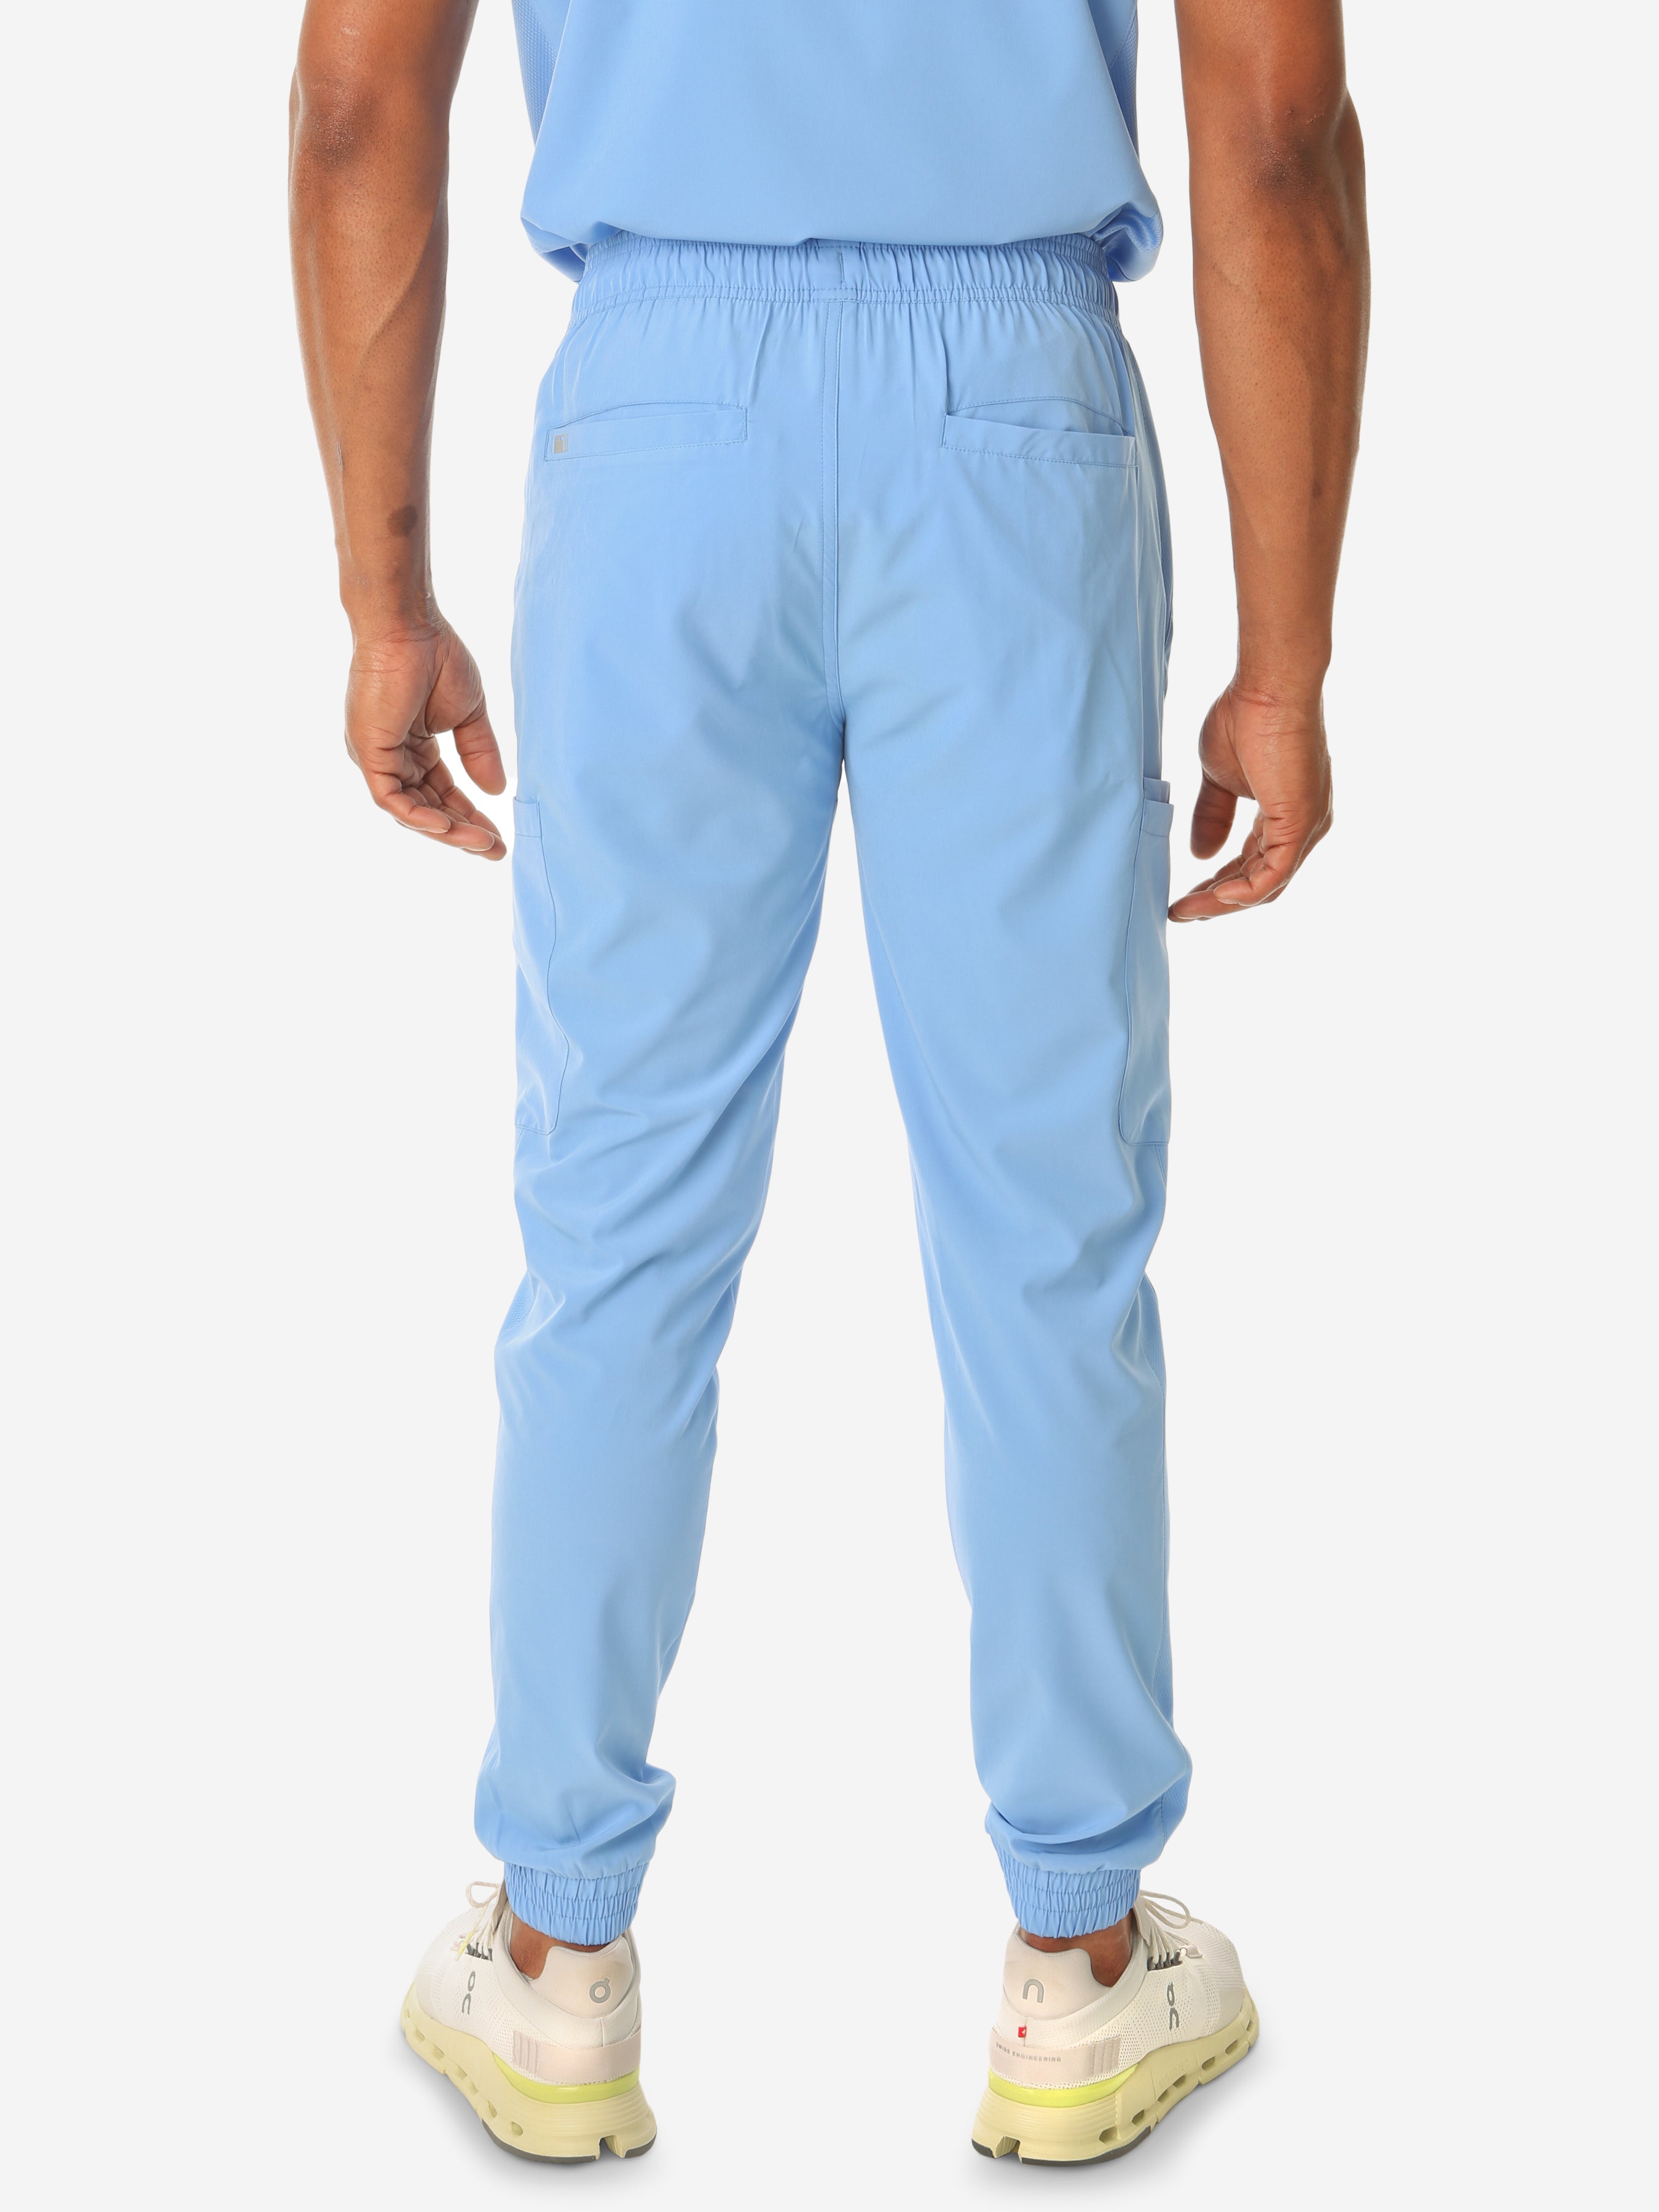 TiScrubs Stretch Ceil Blue Men's Jogger Scrub Pants Only Back